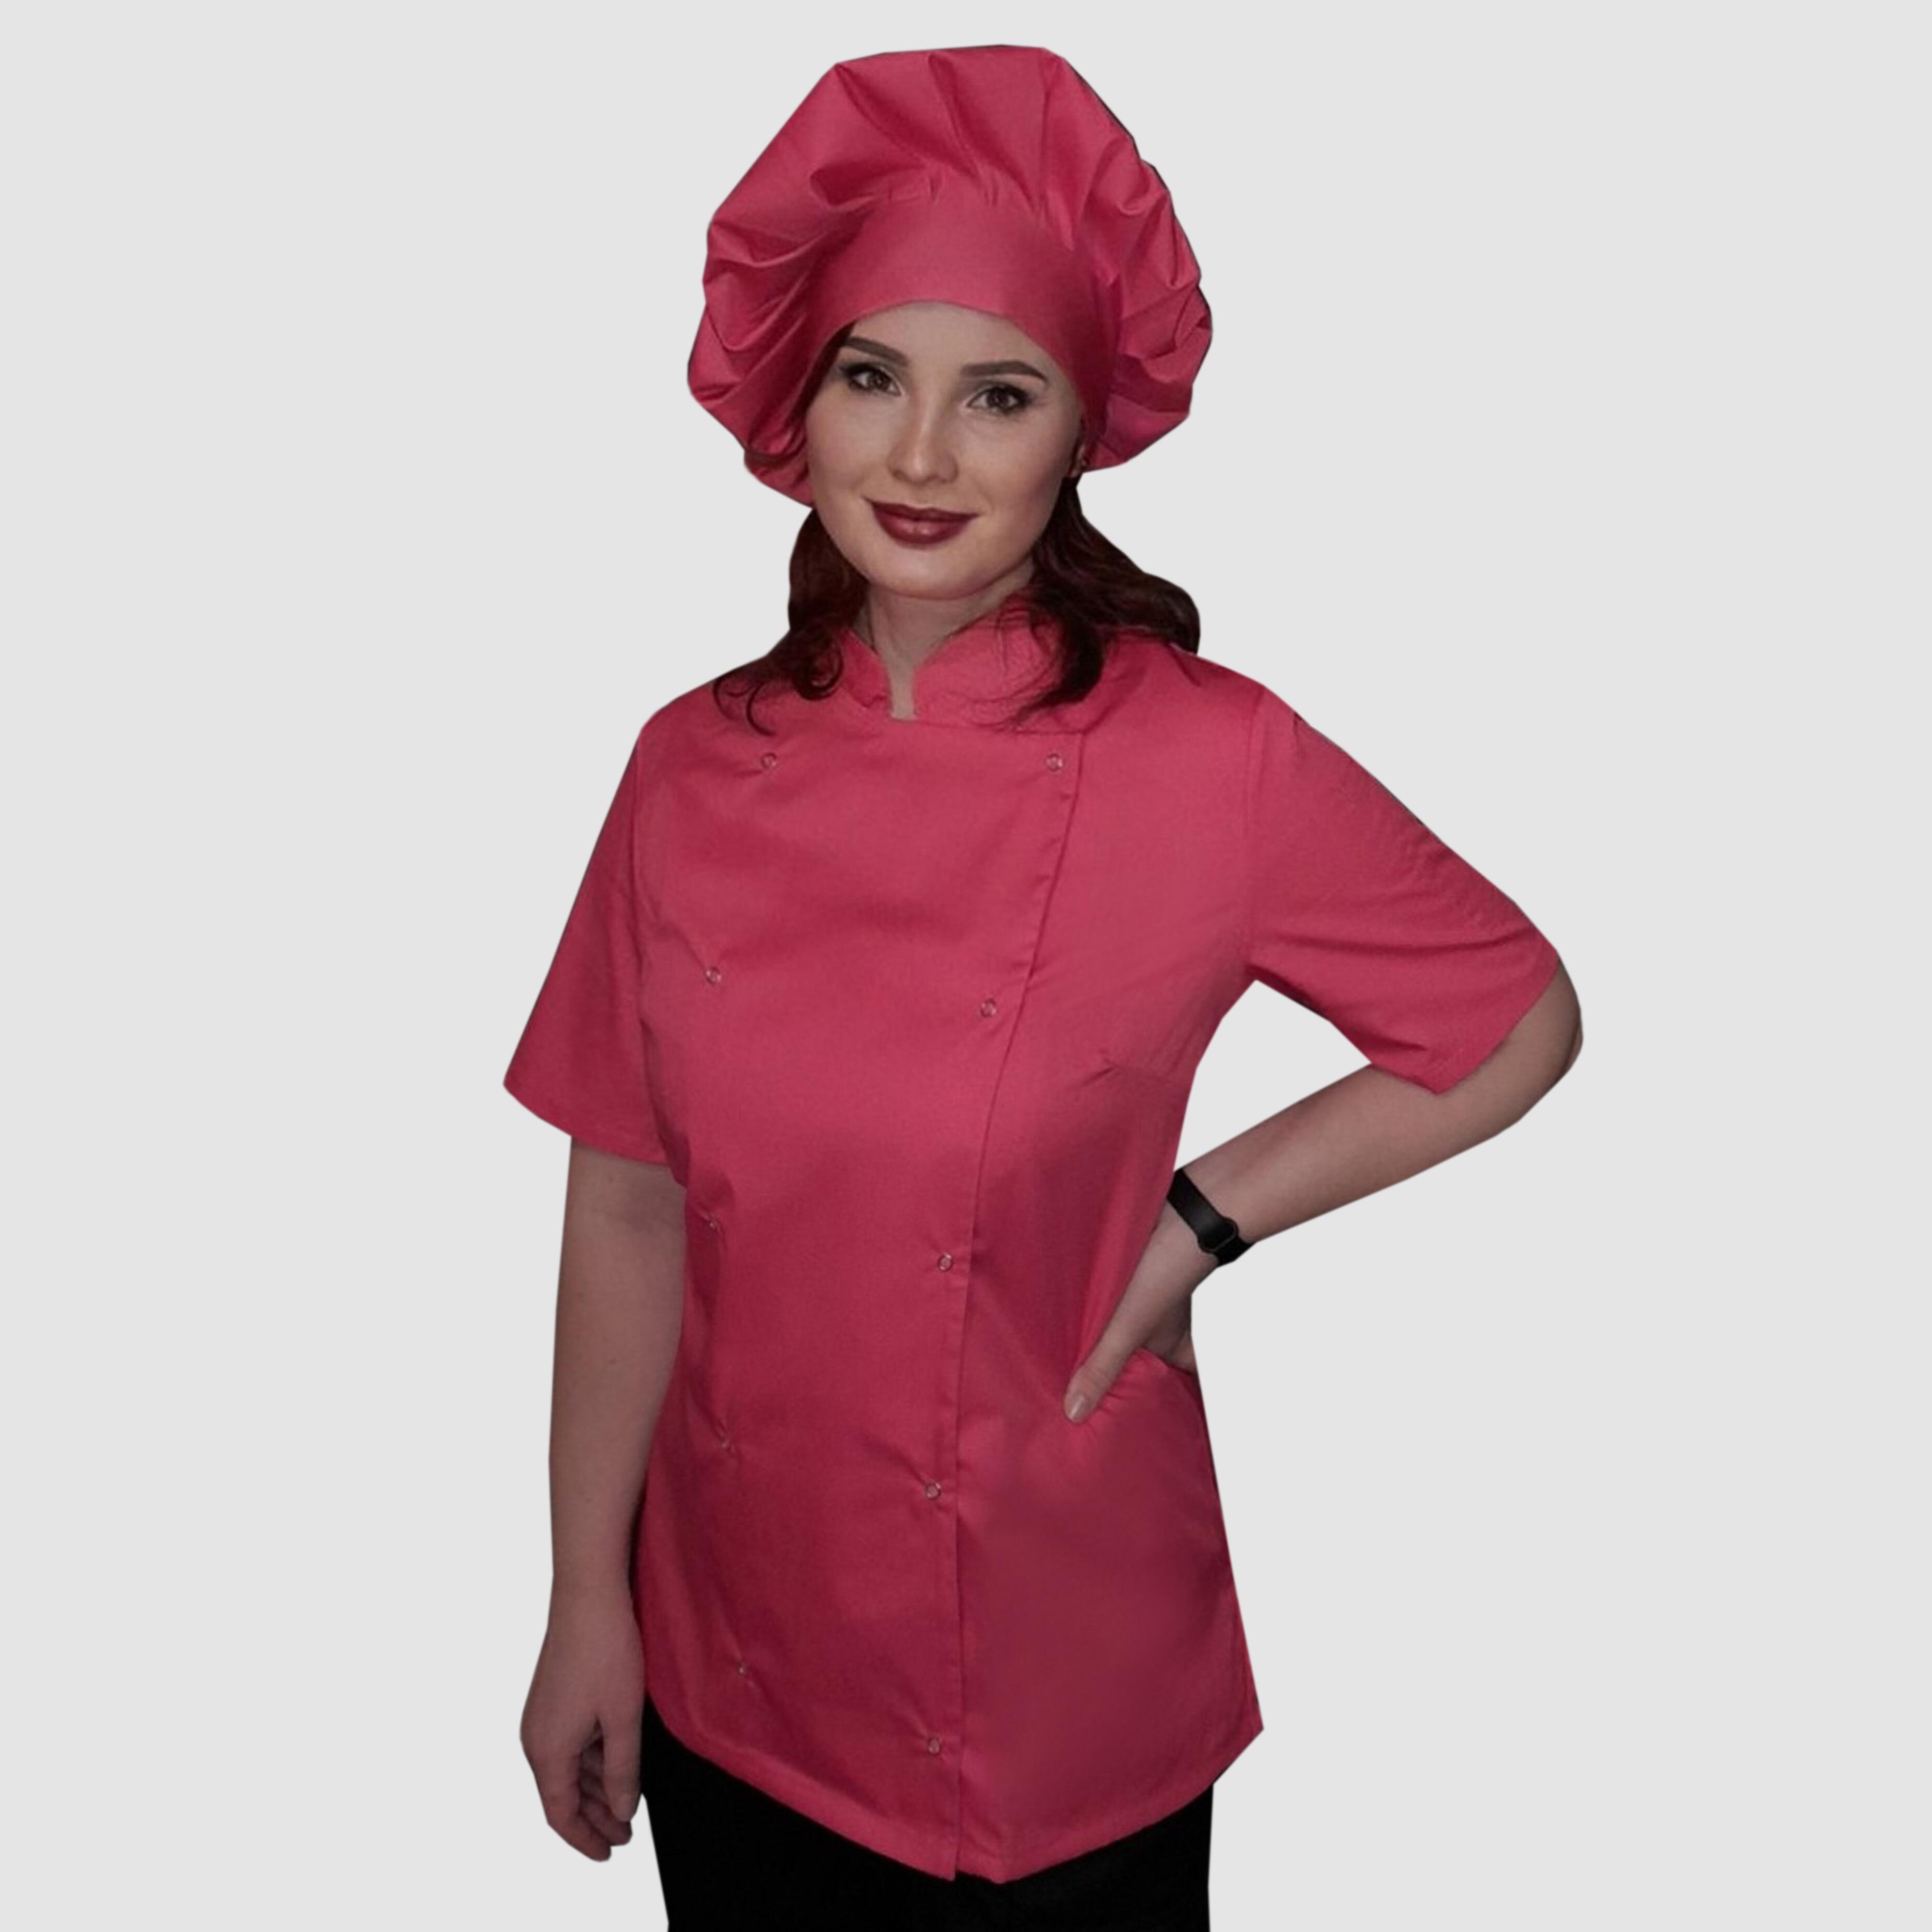 Nibano Women's Short Sleeve Chef's Jacket Coral